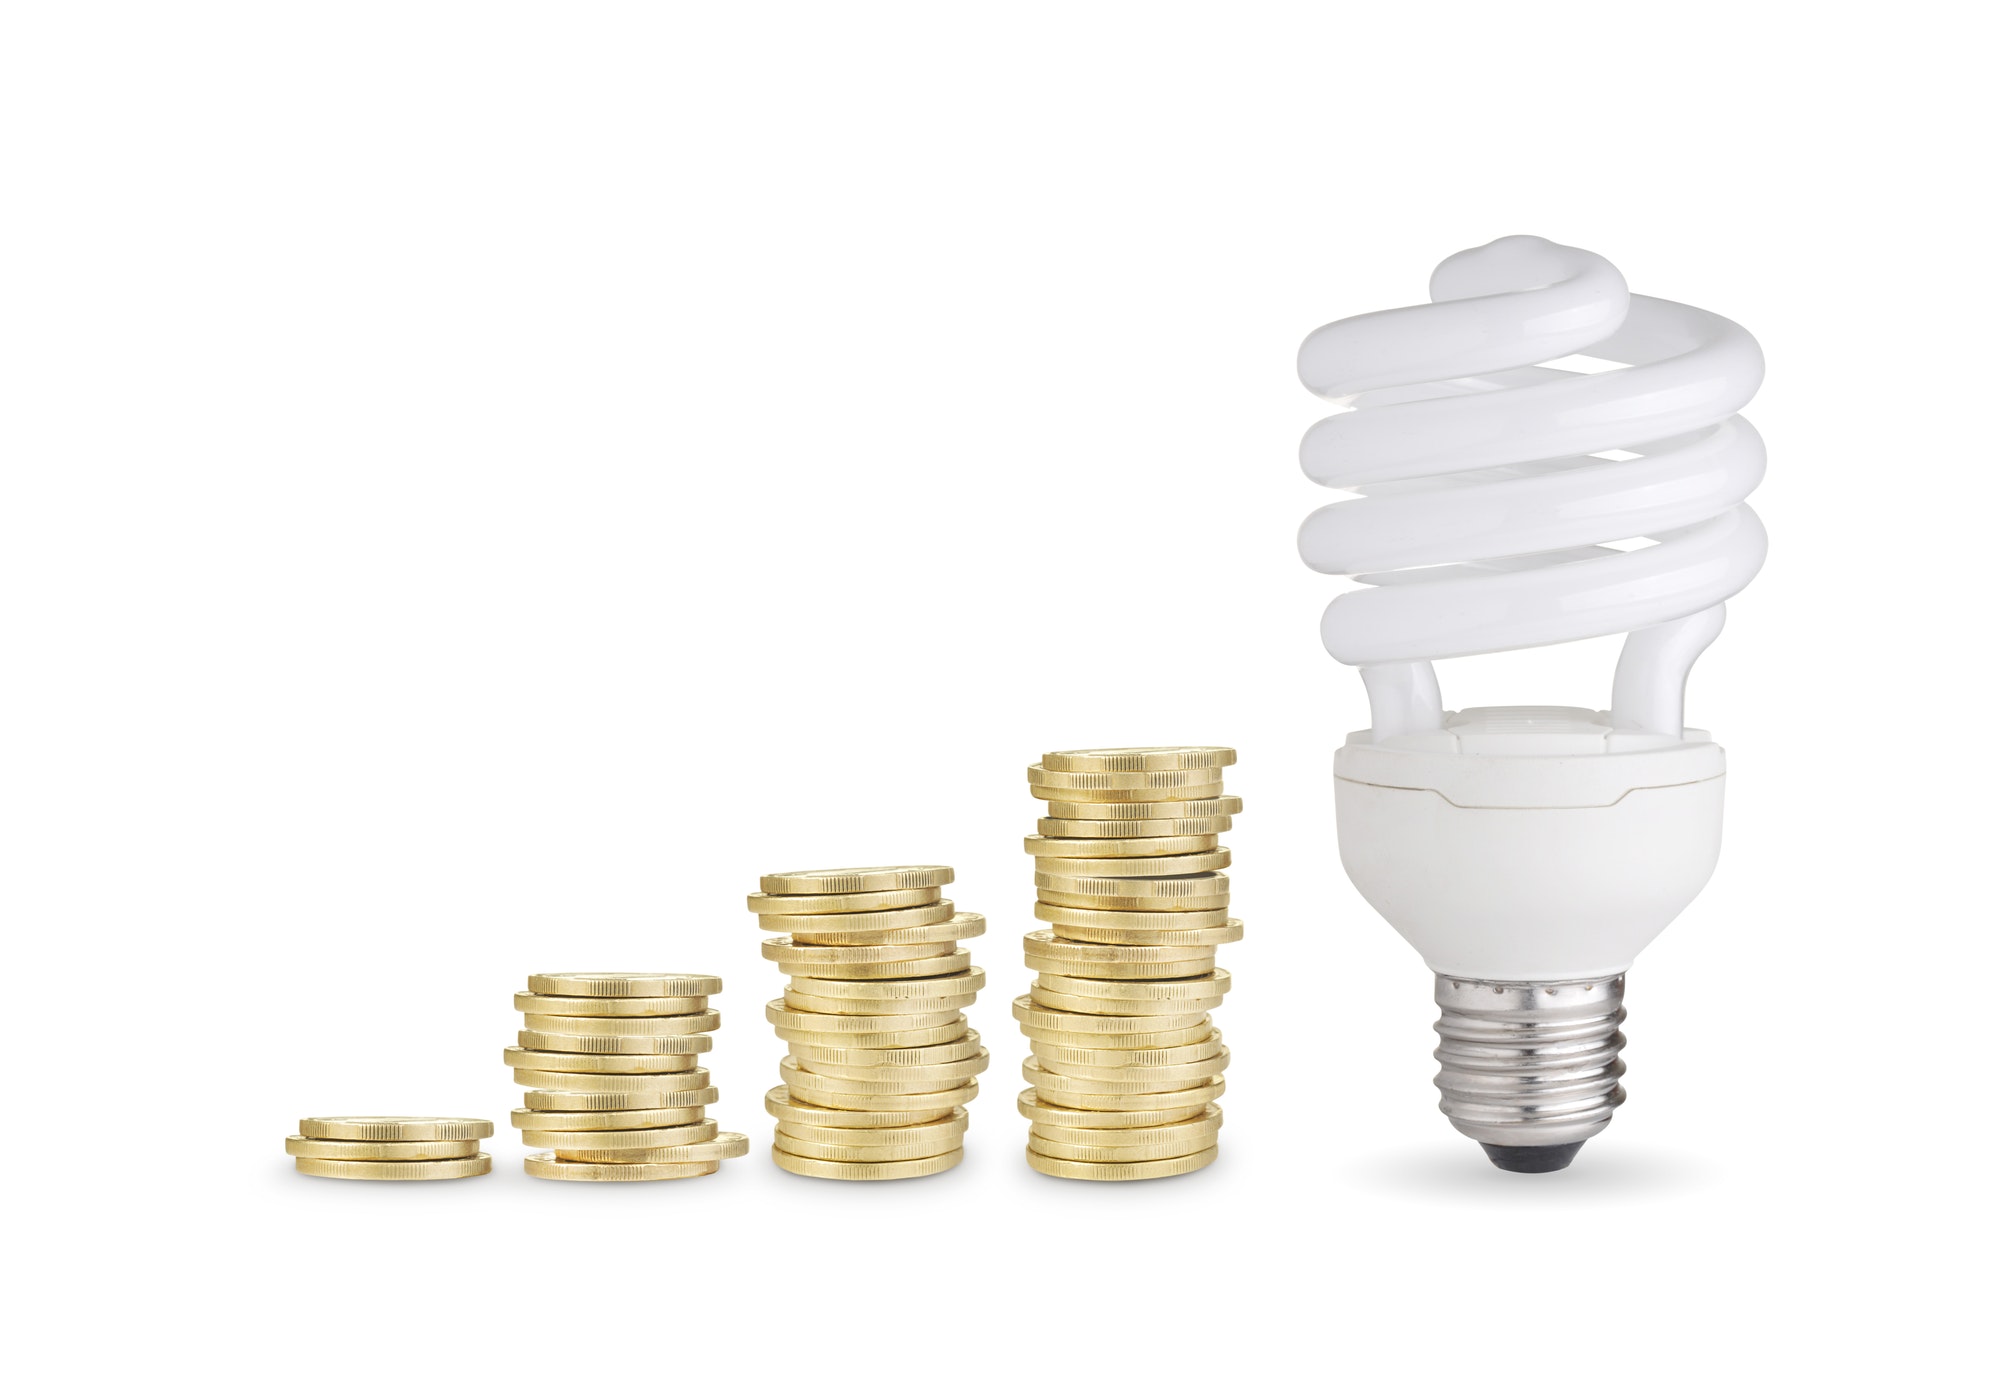 Coins and energy saver bulb